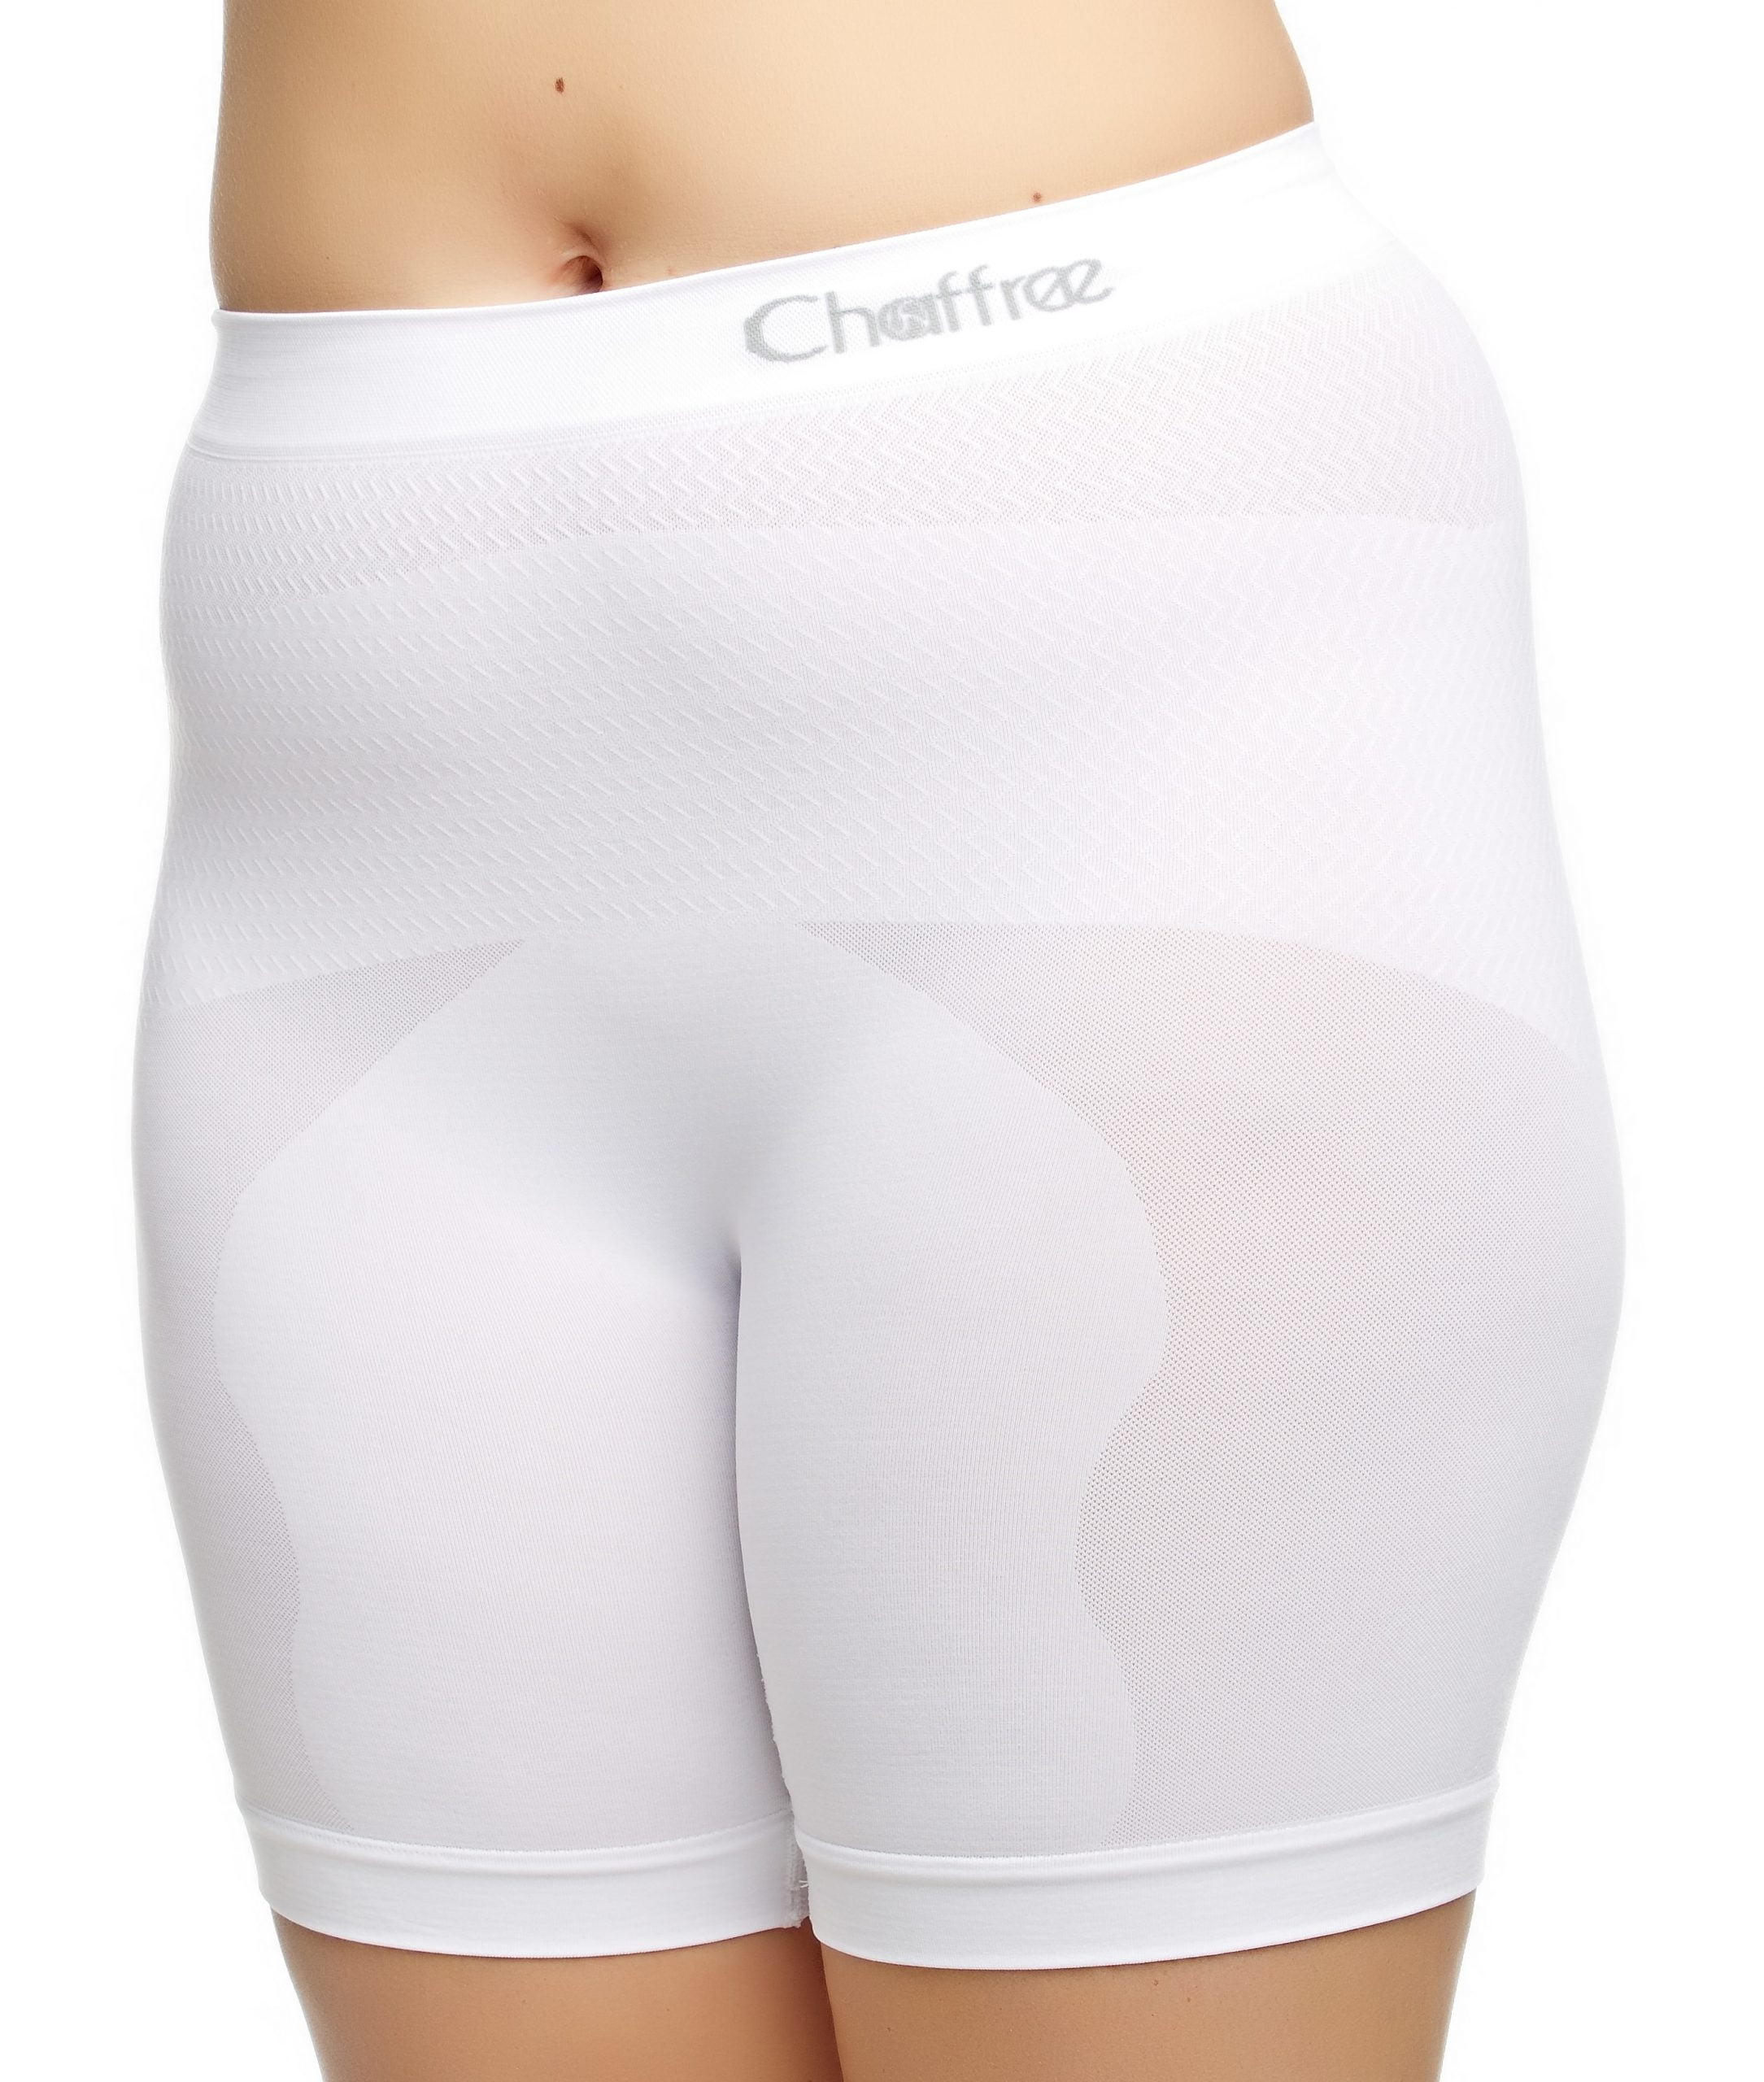 Chaffree Womens Anti Chafing Knickers, Full/High Waist Long Leg Briefs,  Prevent Thigh Rubbing Underwear 1PK (14-18, Blossom) : : Fashion